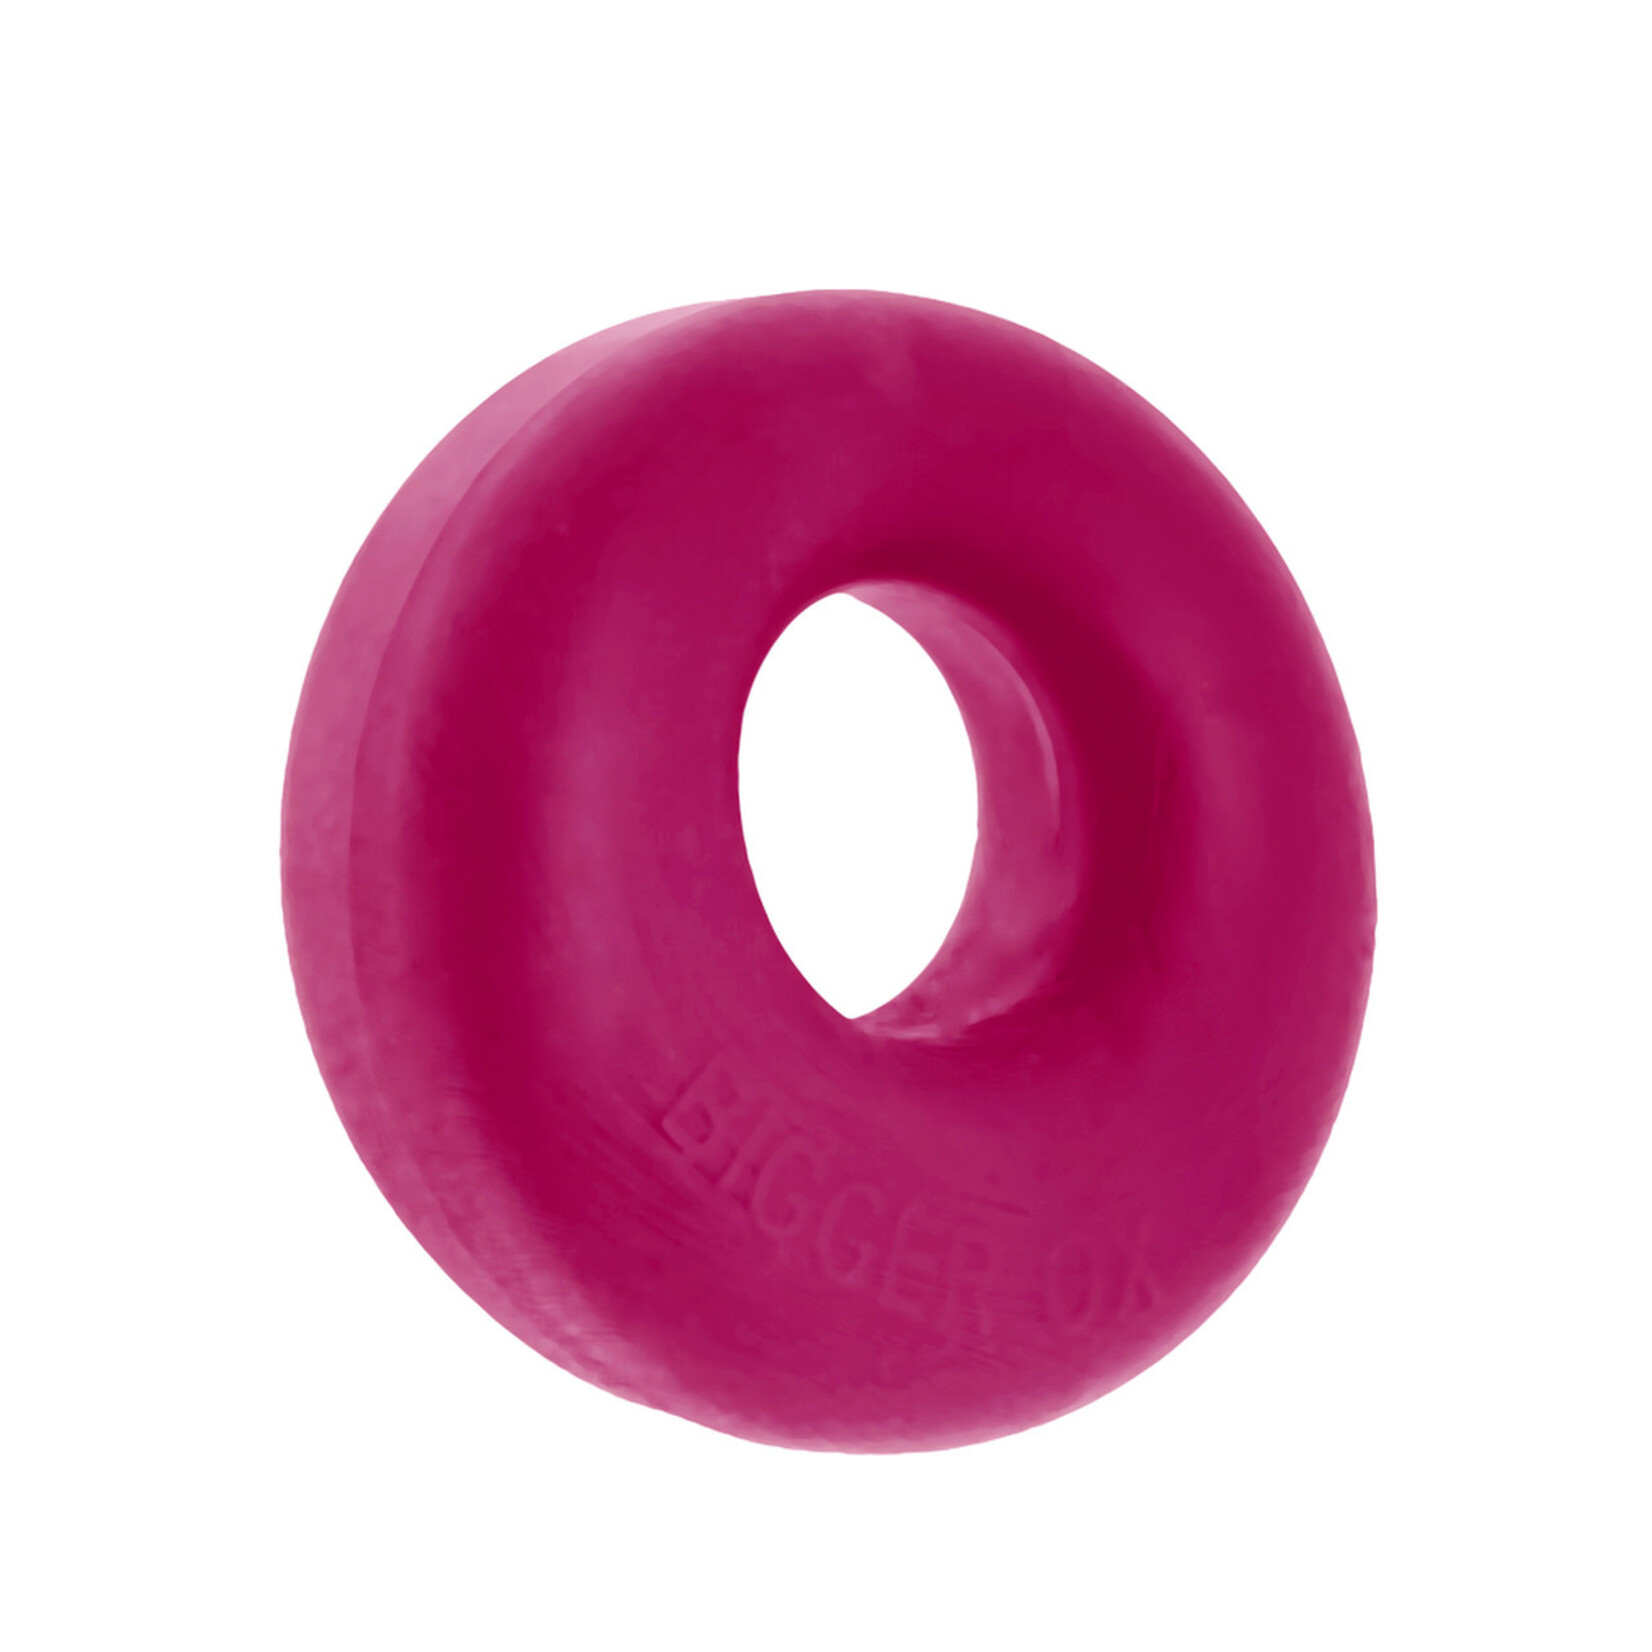 OxBalls Oxballs- Bigger Ox Silicone Cock Ring